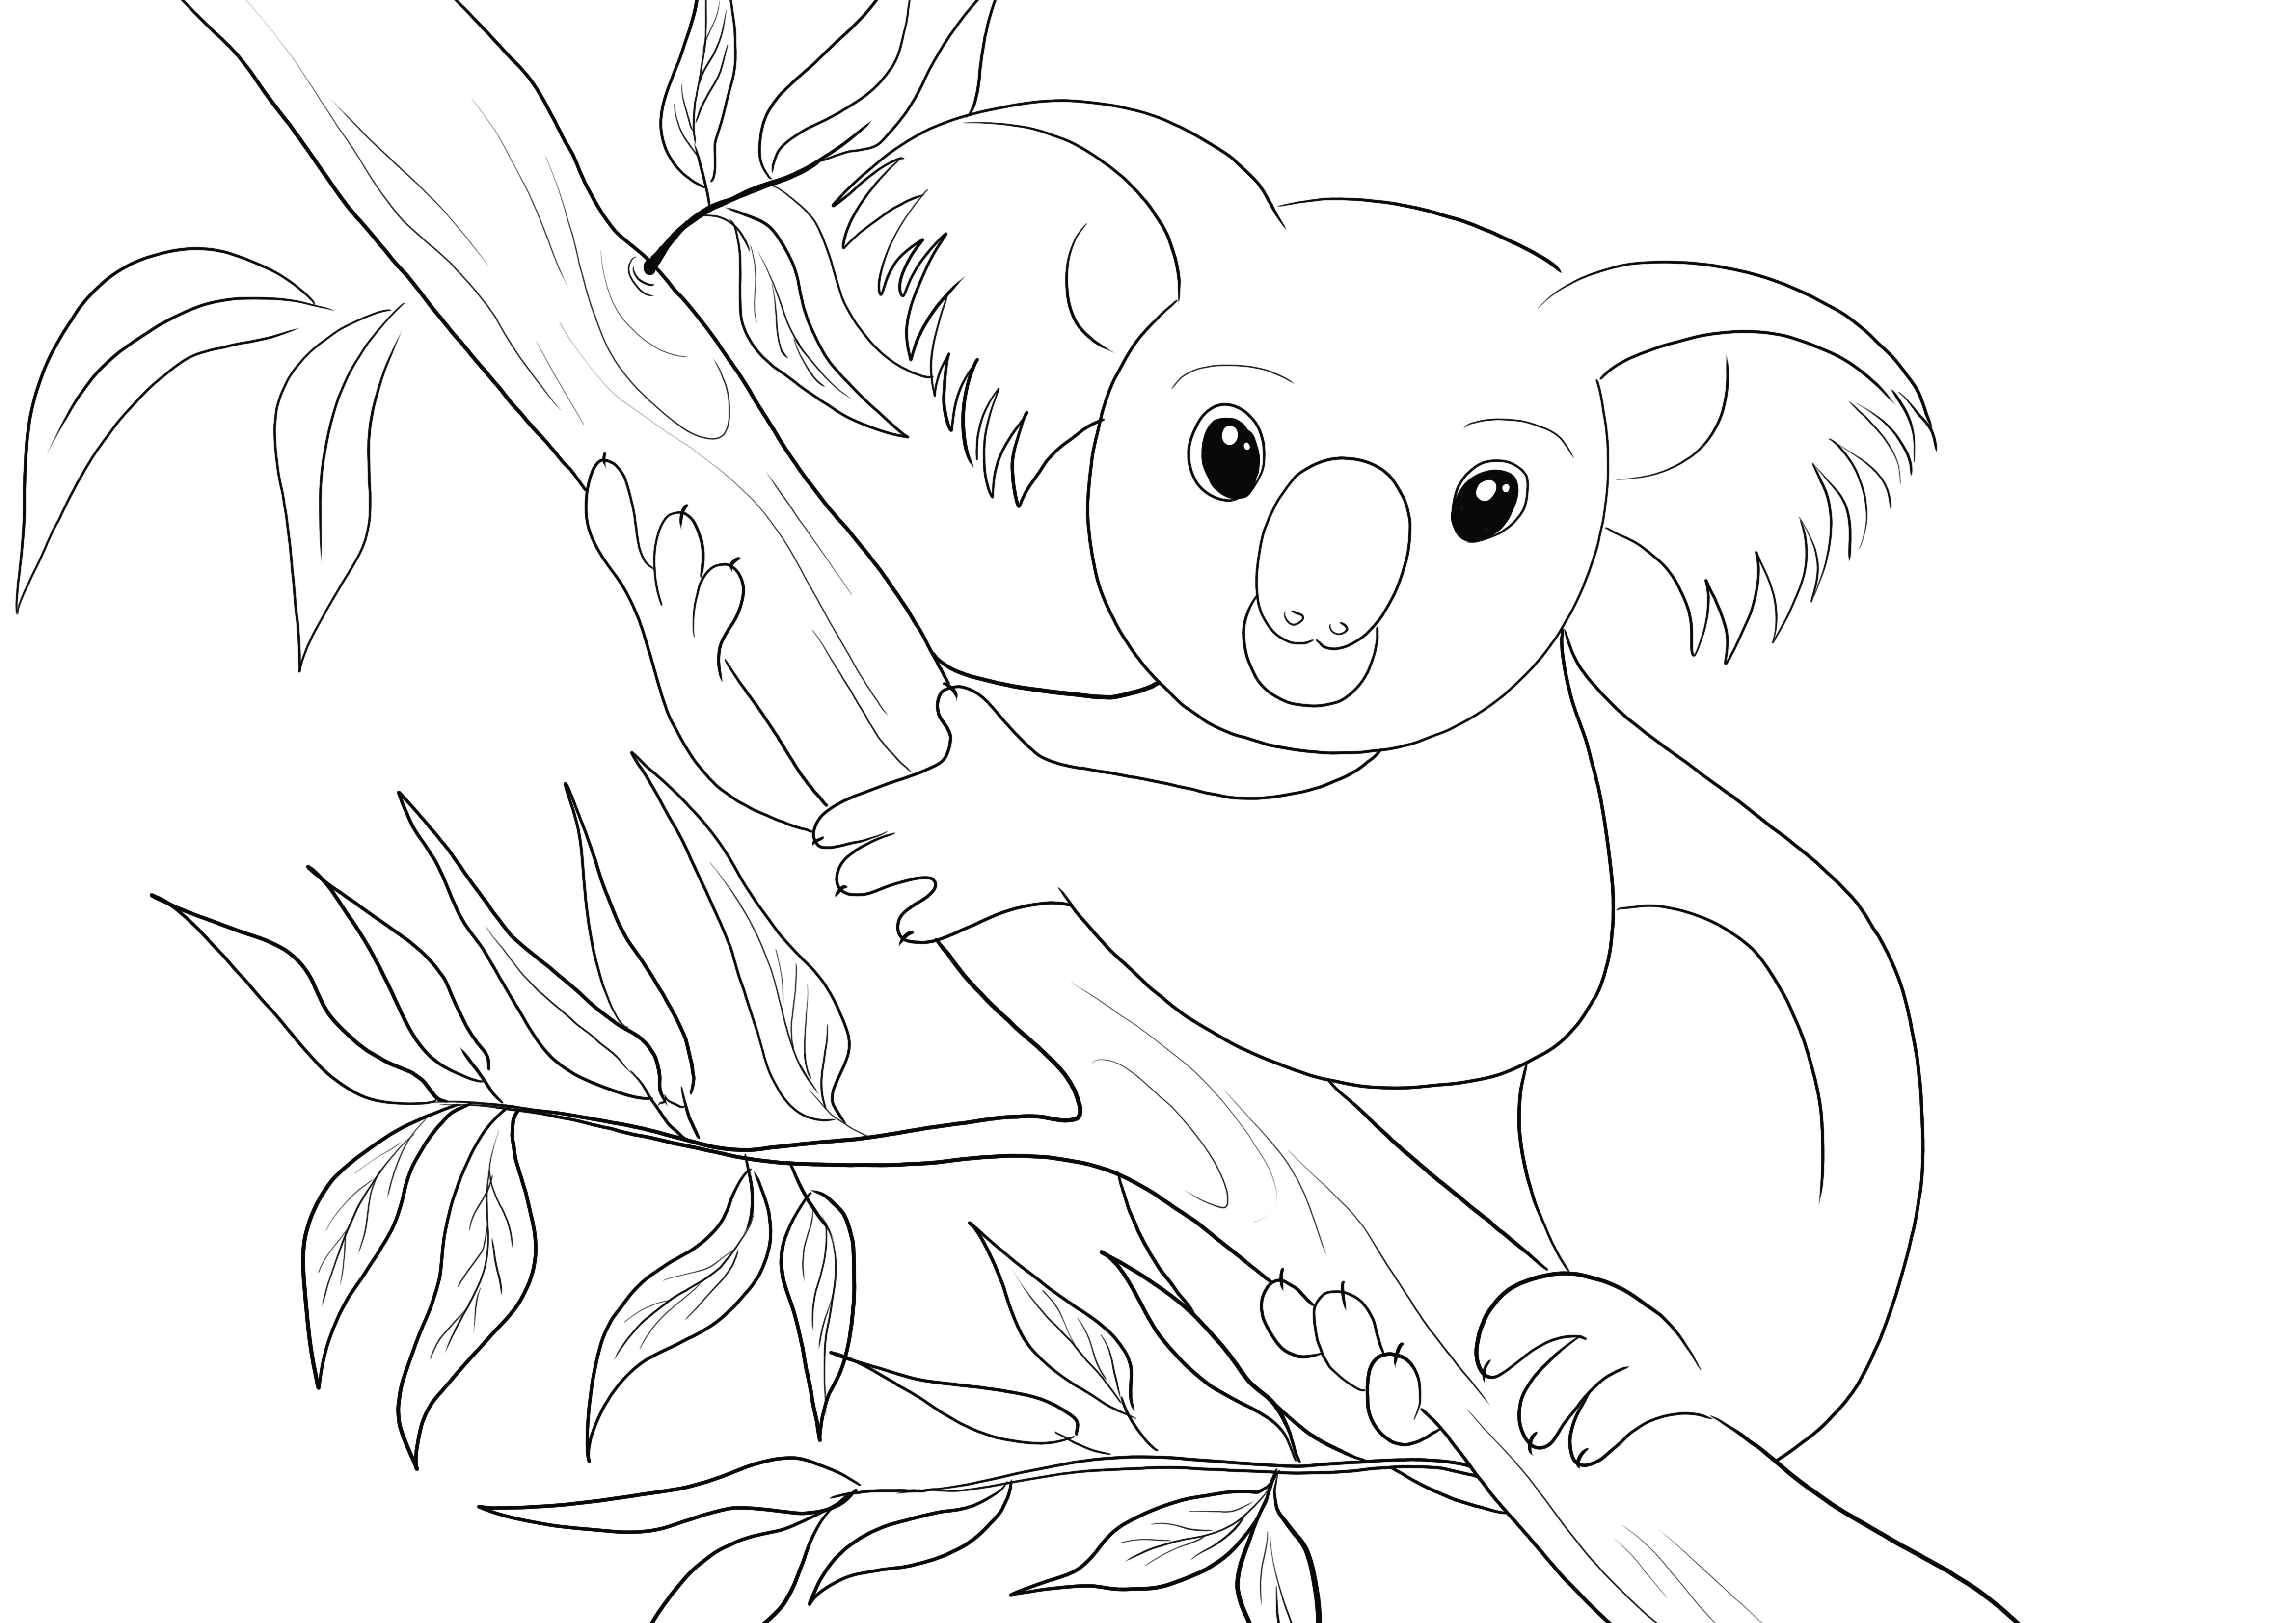 Lembar mewarnai Koala lucu gratis untuk dicetak dan diunduh